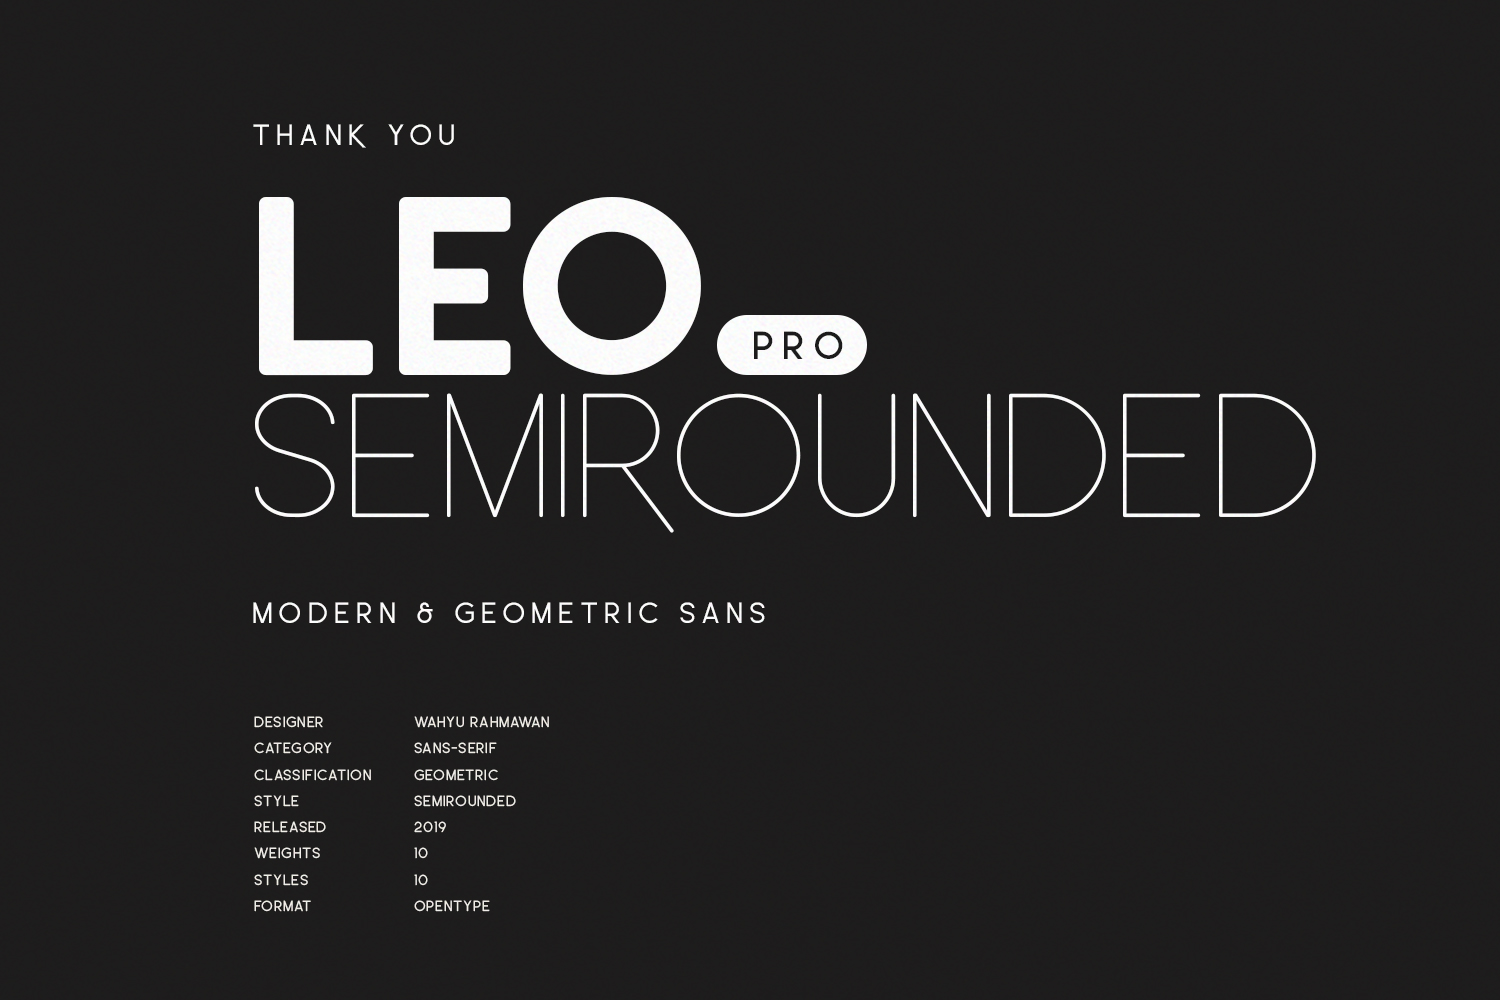 Ejemplo de fuente Leo SemiRounded Pro Light